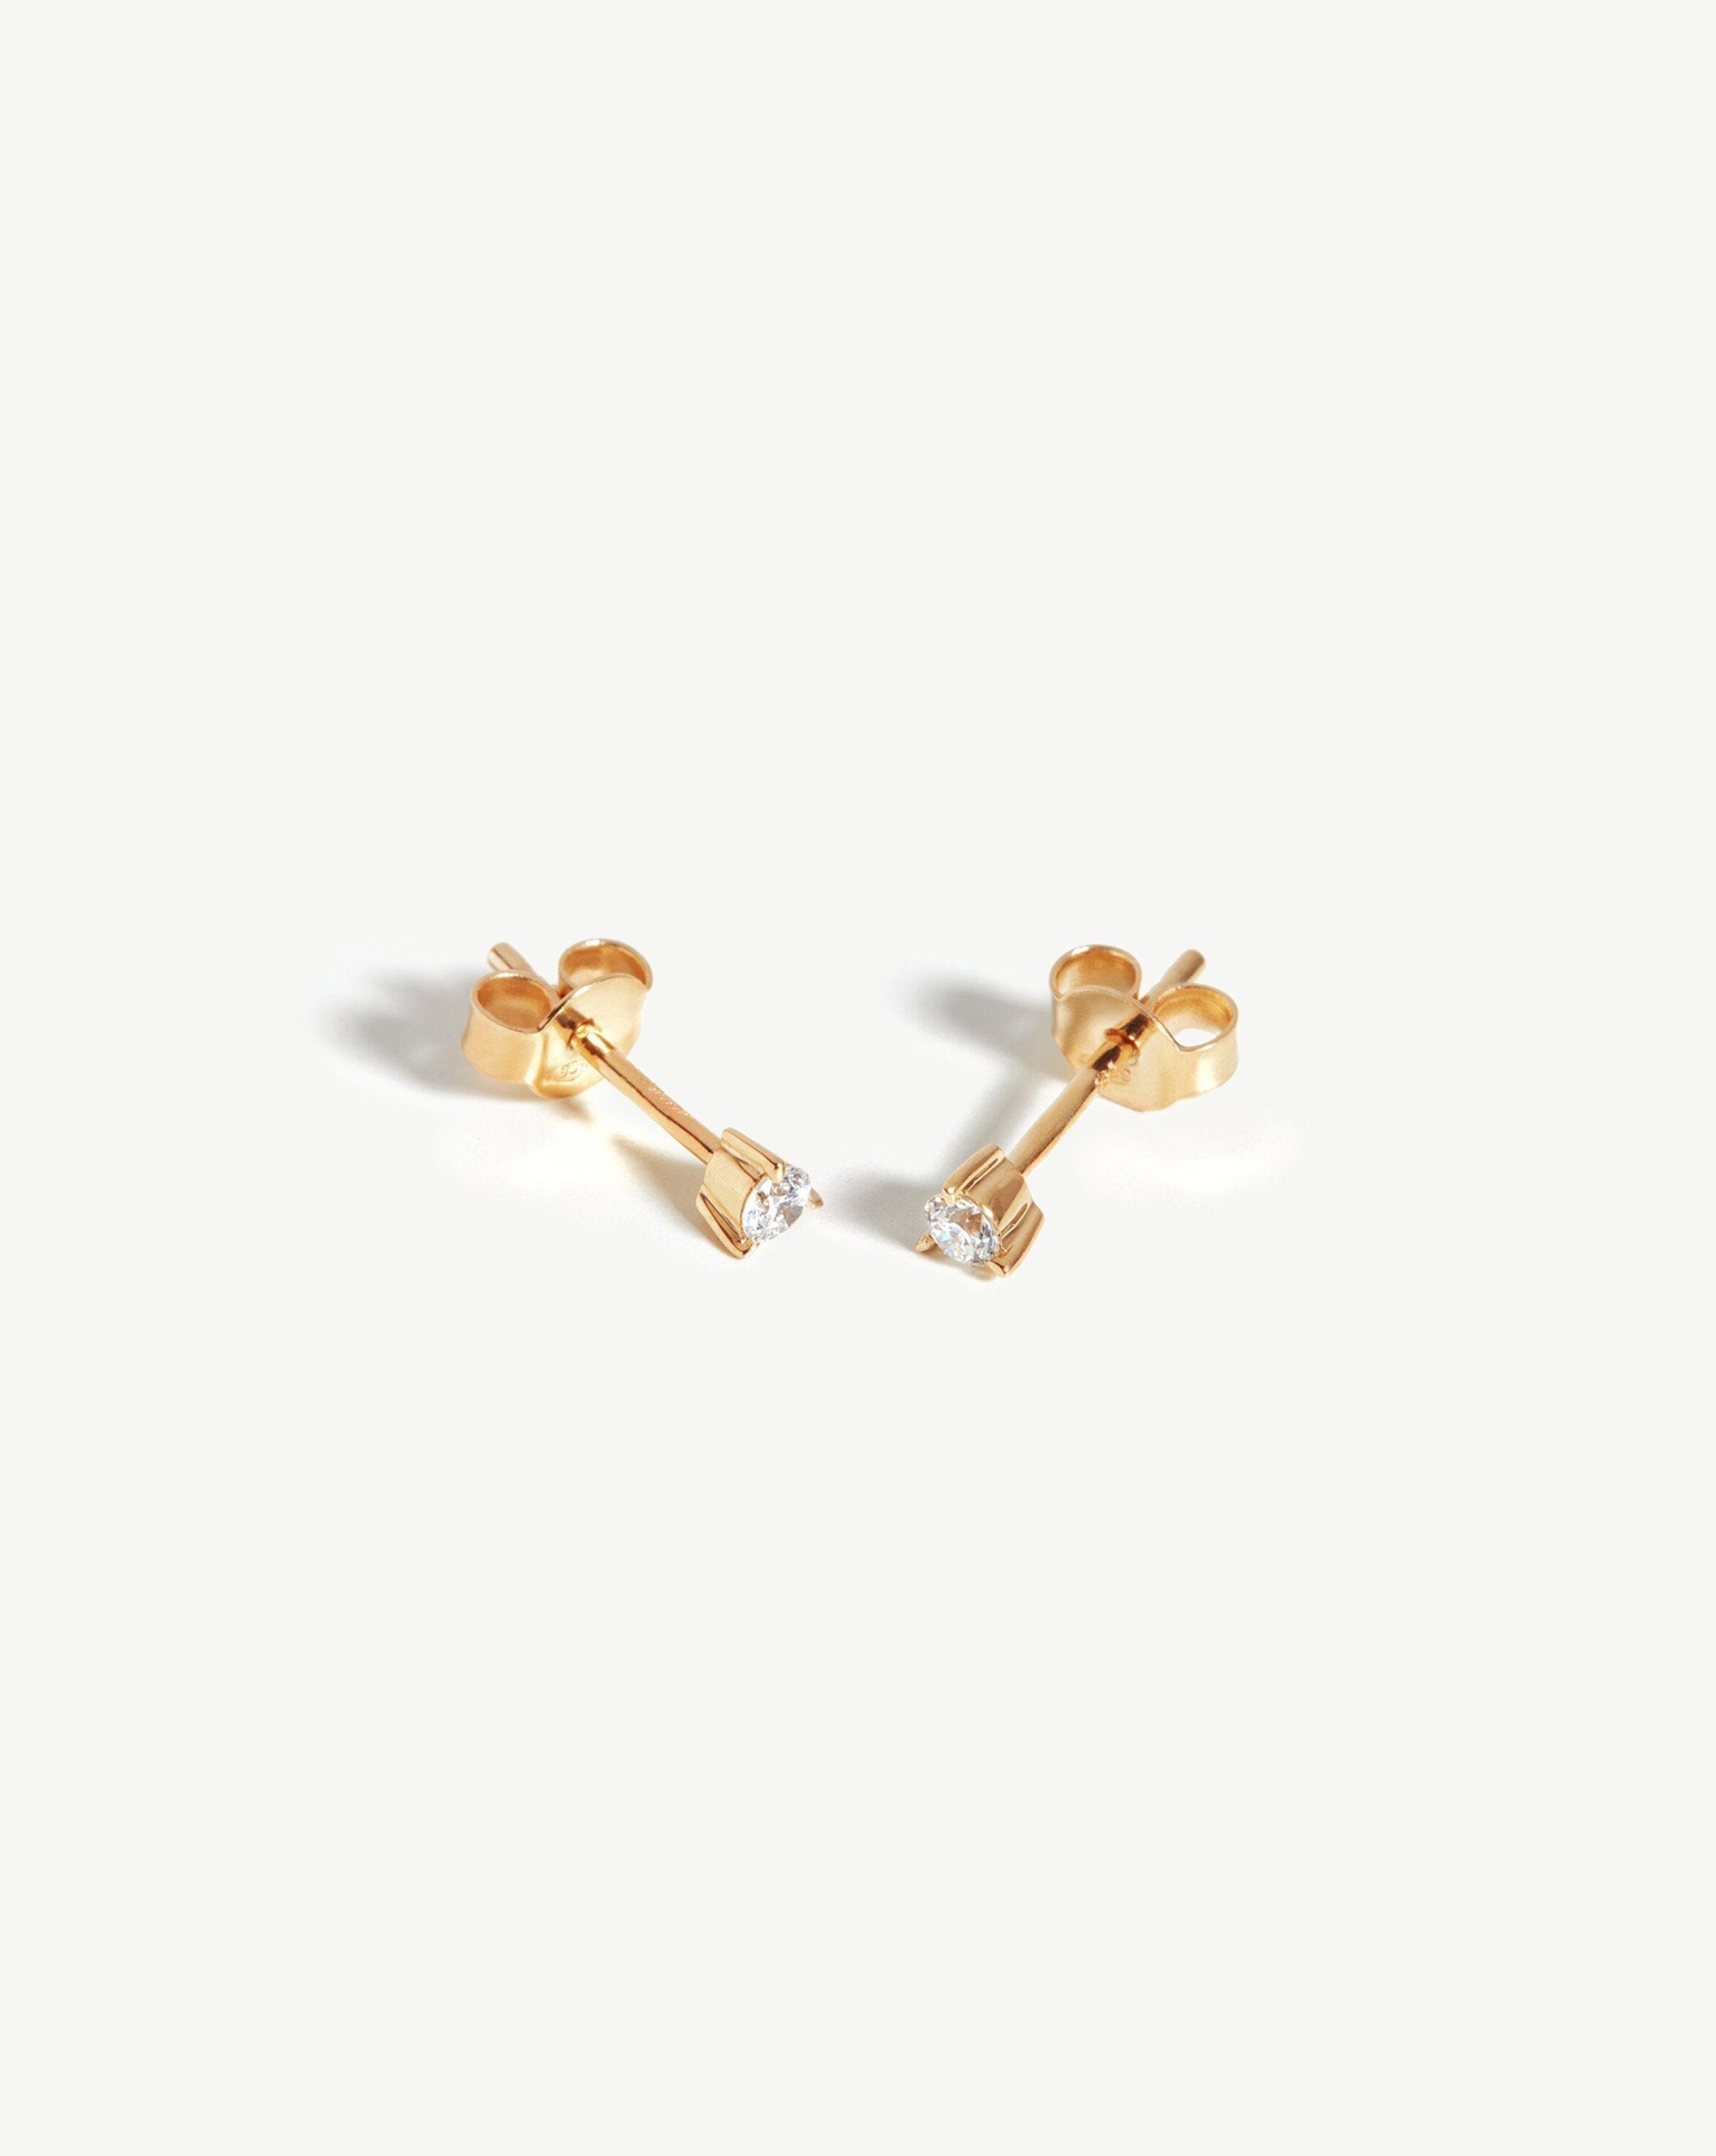 Fine Small Solitaire Diamond Stud Earrings | 14k Solid Gold Earrings Missoma 